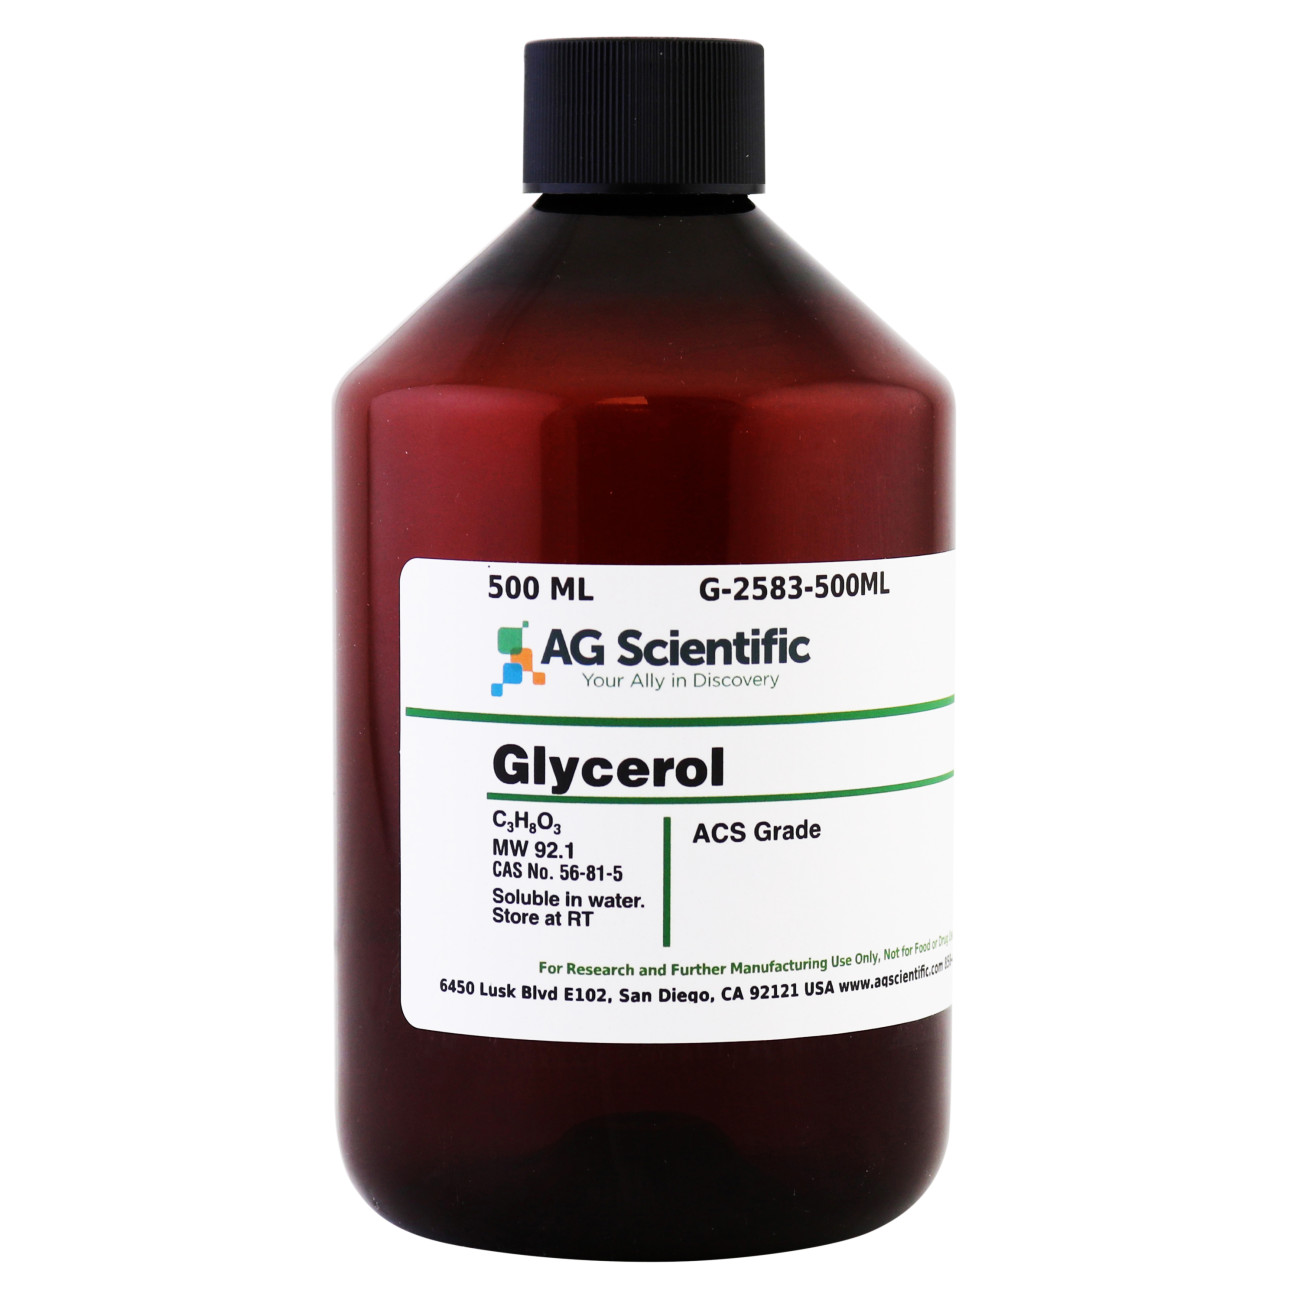 Buy Glycerin 99.5% Reagent Grade $30+ Bulk Sizes